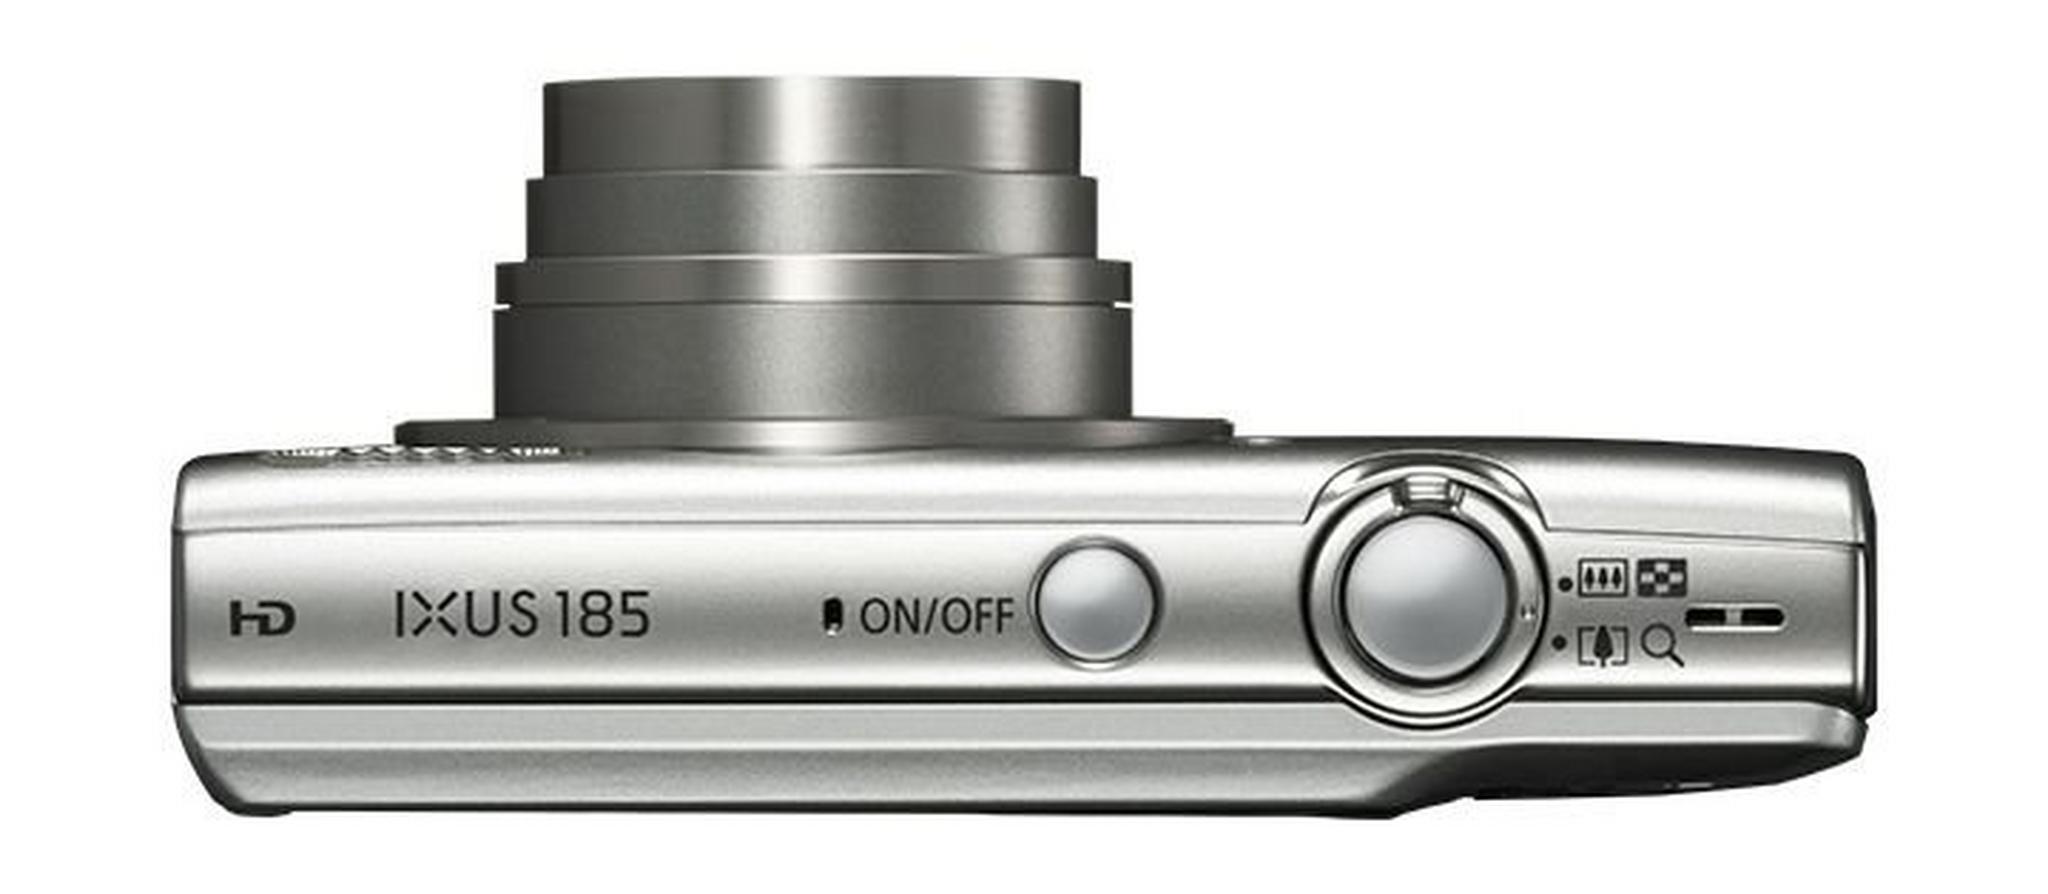 Canon IXUS 185 Digital Camera, 20MP 2.7-inch LCD Display – Silver